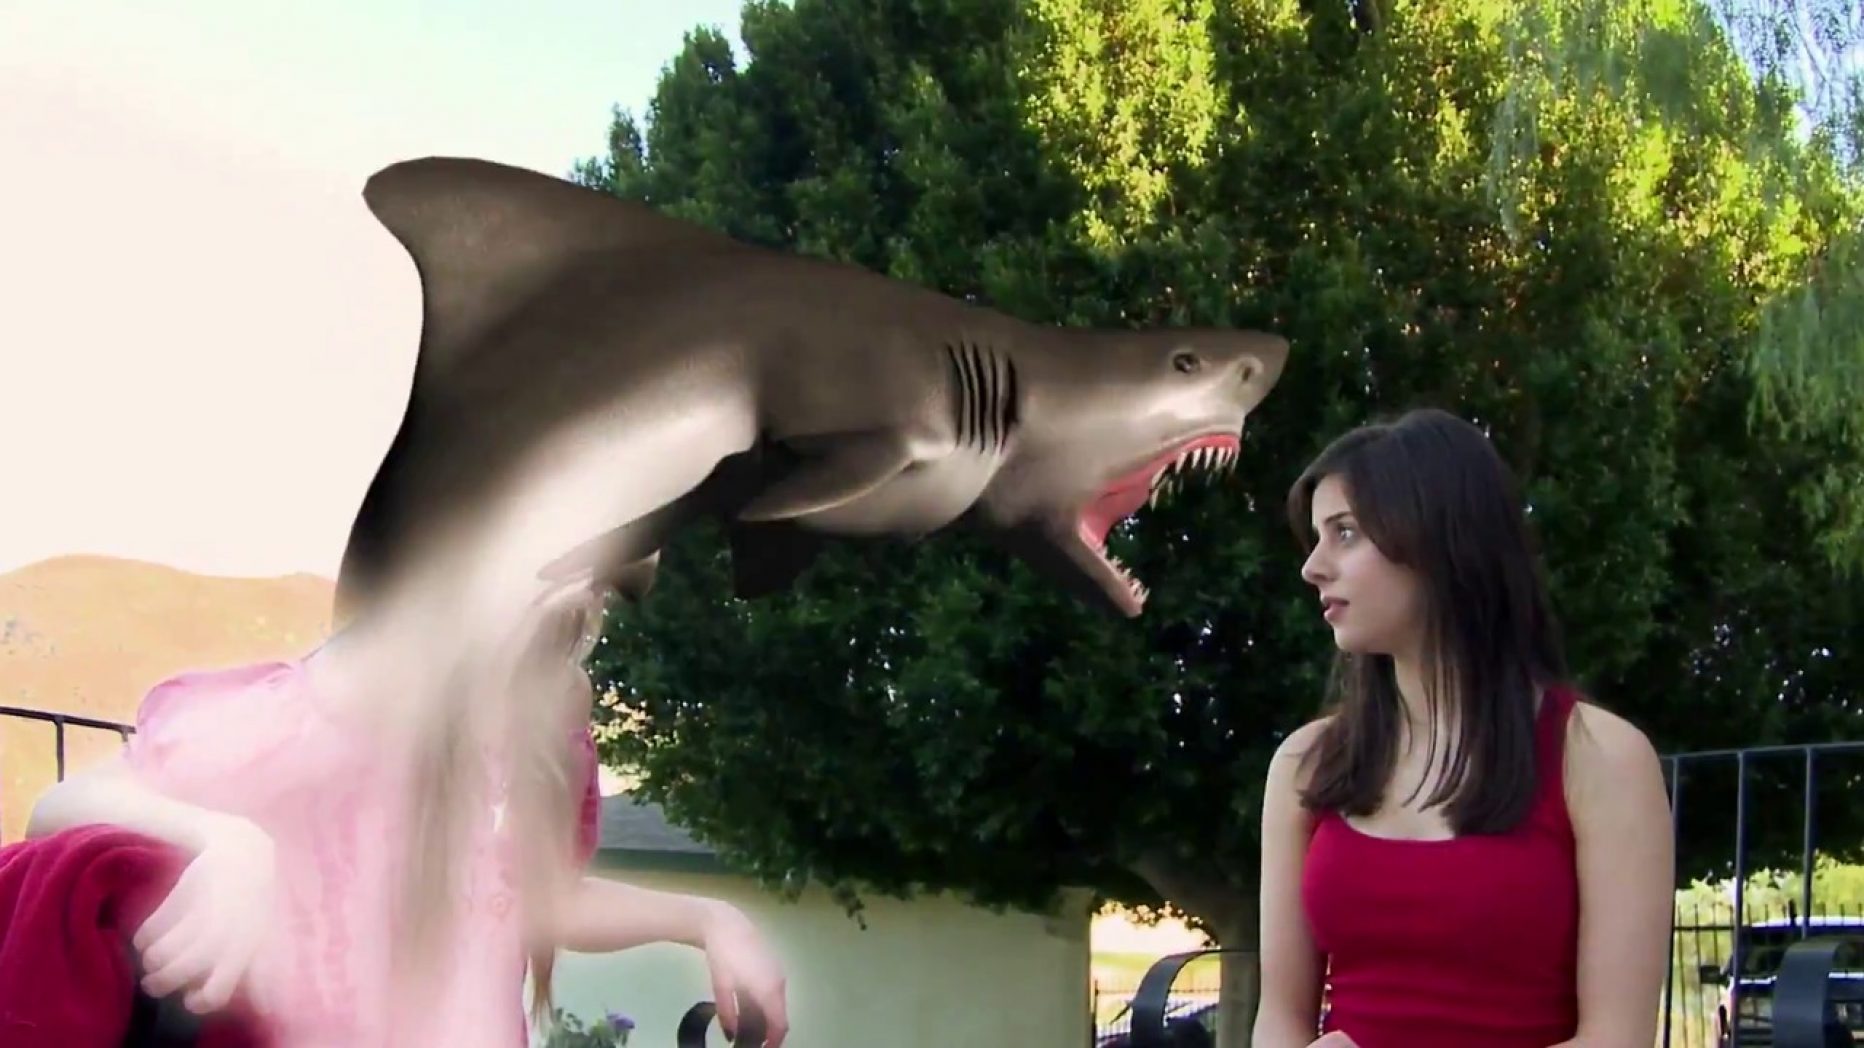 Saturday is sharkday #10: 90210 Shark Attack